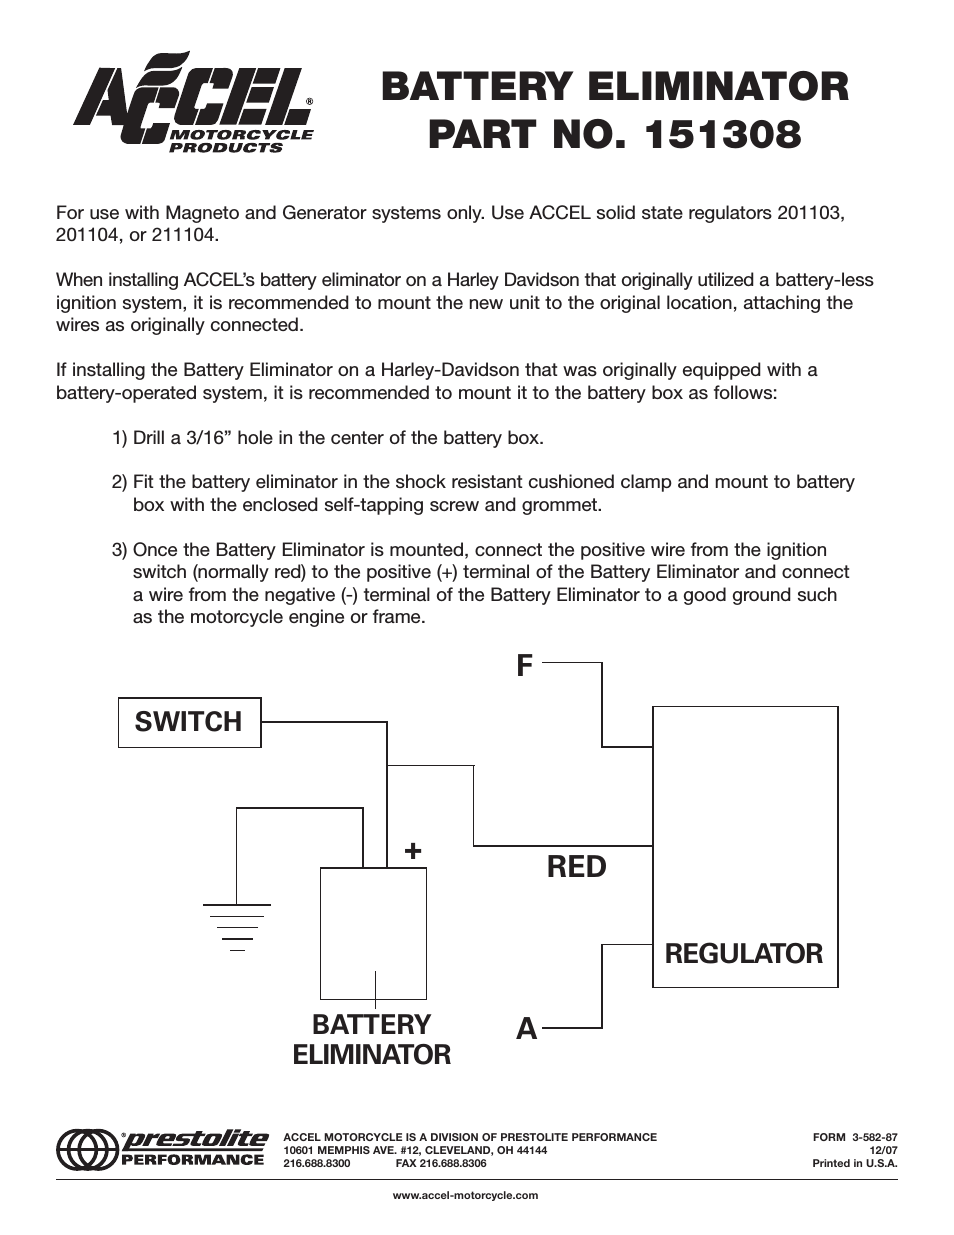 ACCEL Battery Eliminator 151308